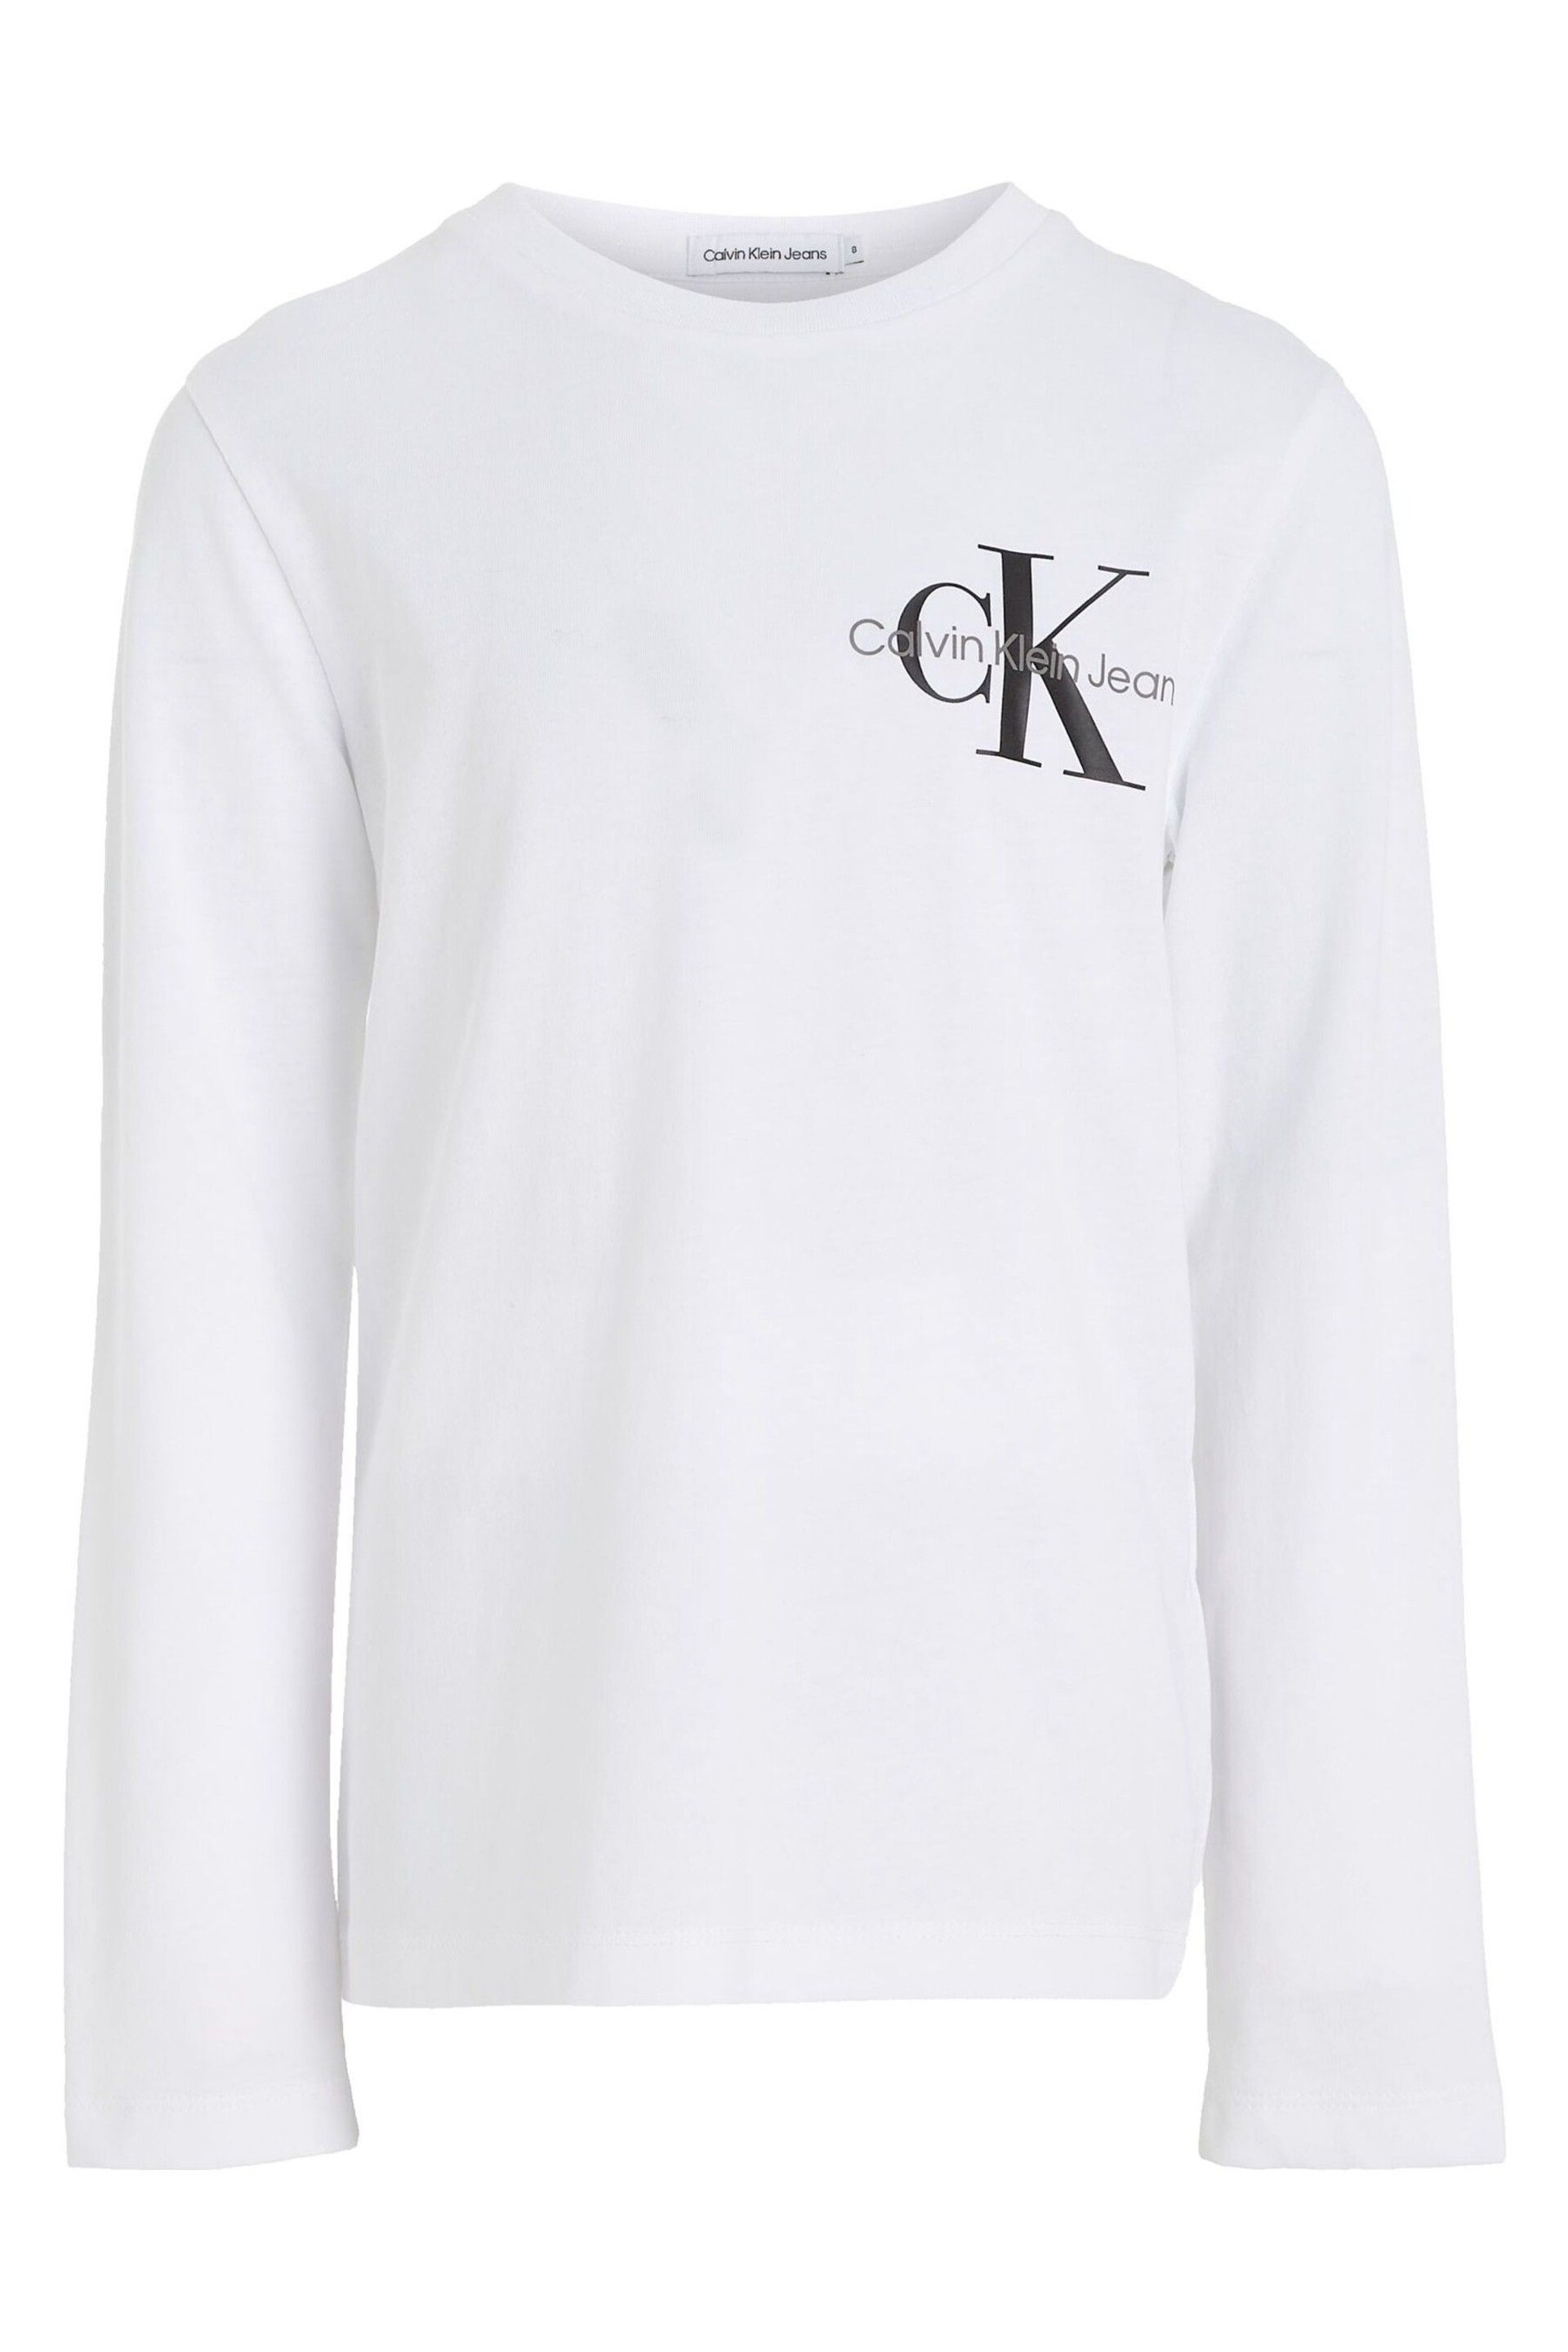 Calvin Klein Jeans White Monogram Long Sleeve Top - Image 4 of 6